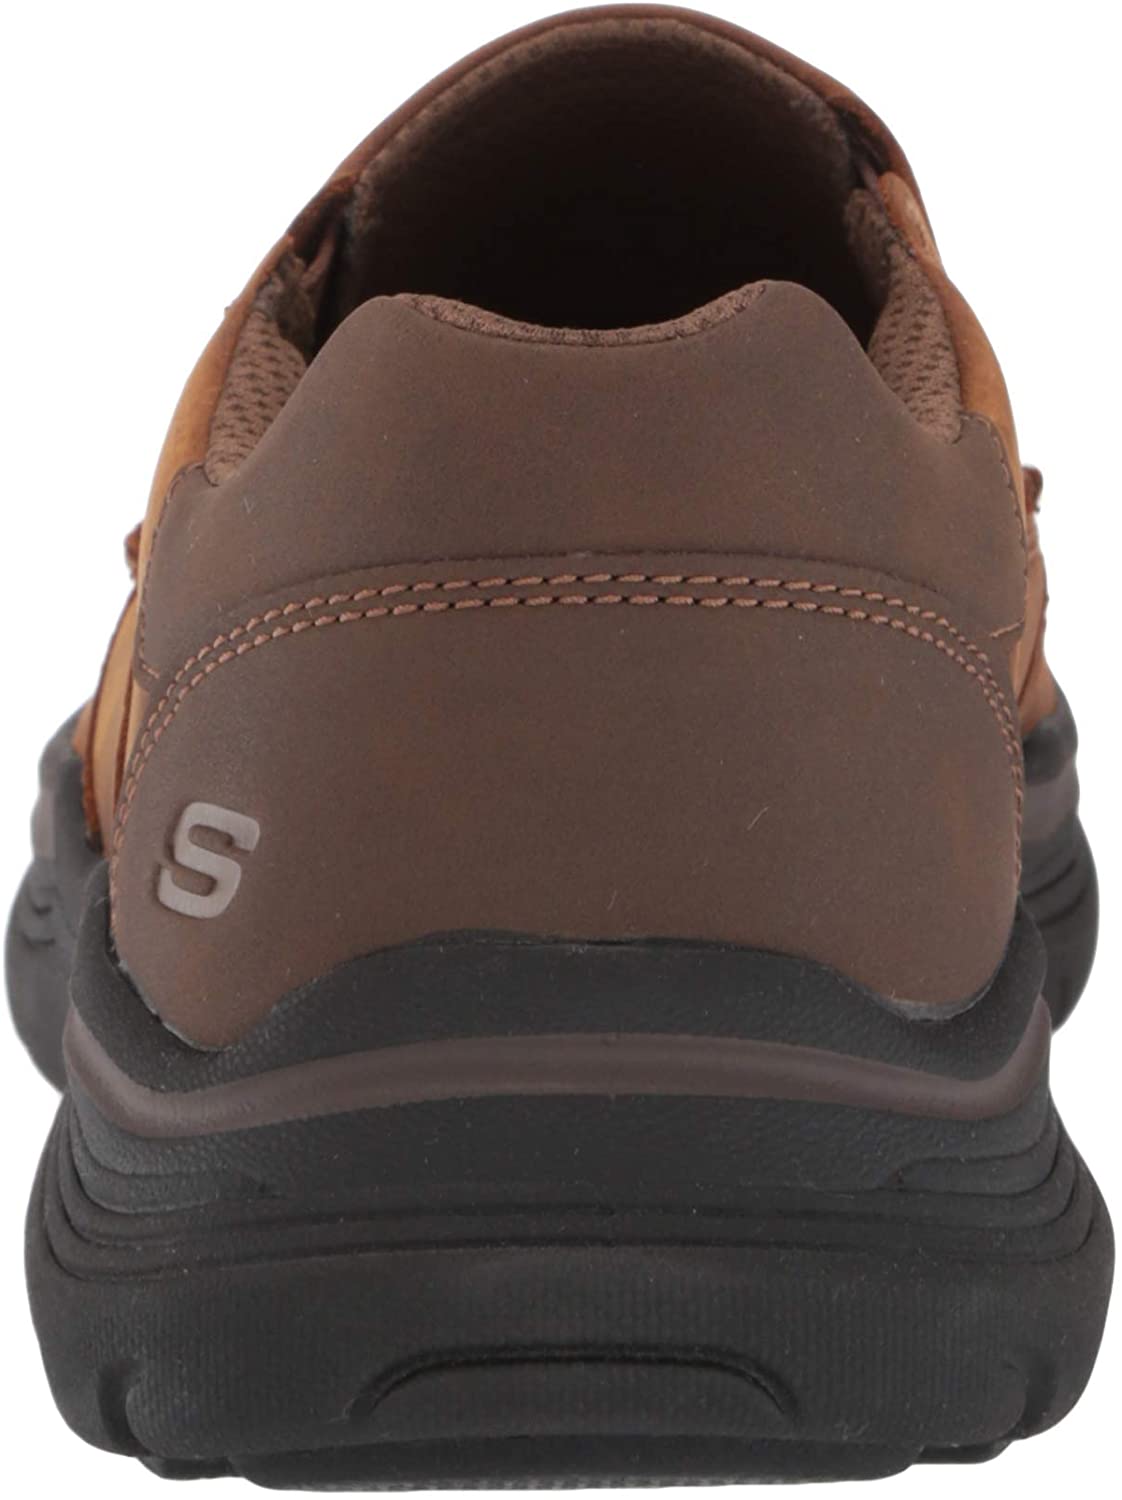 Skechers USA Men's Slip on Moccasin, Brown, Size 12.0 KaqO | eBay